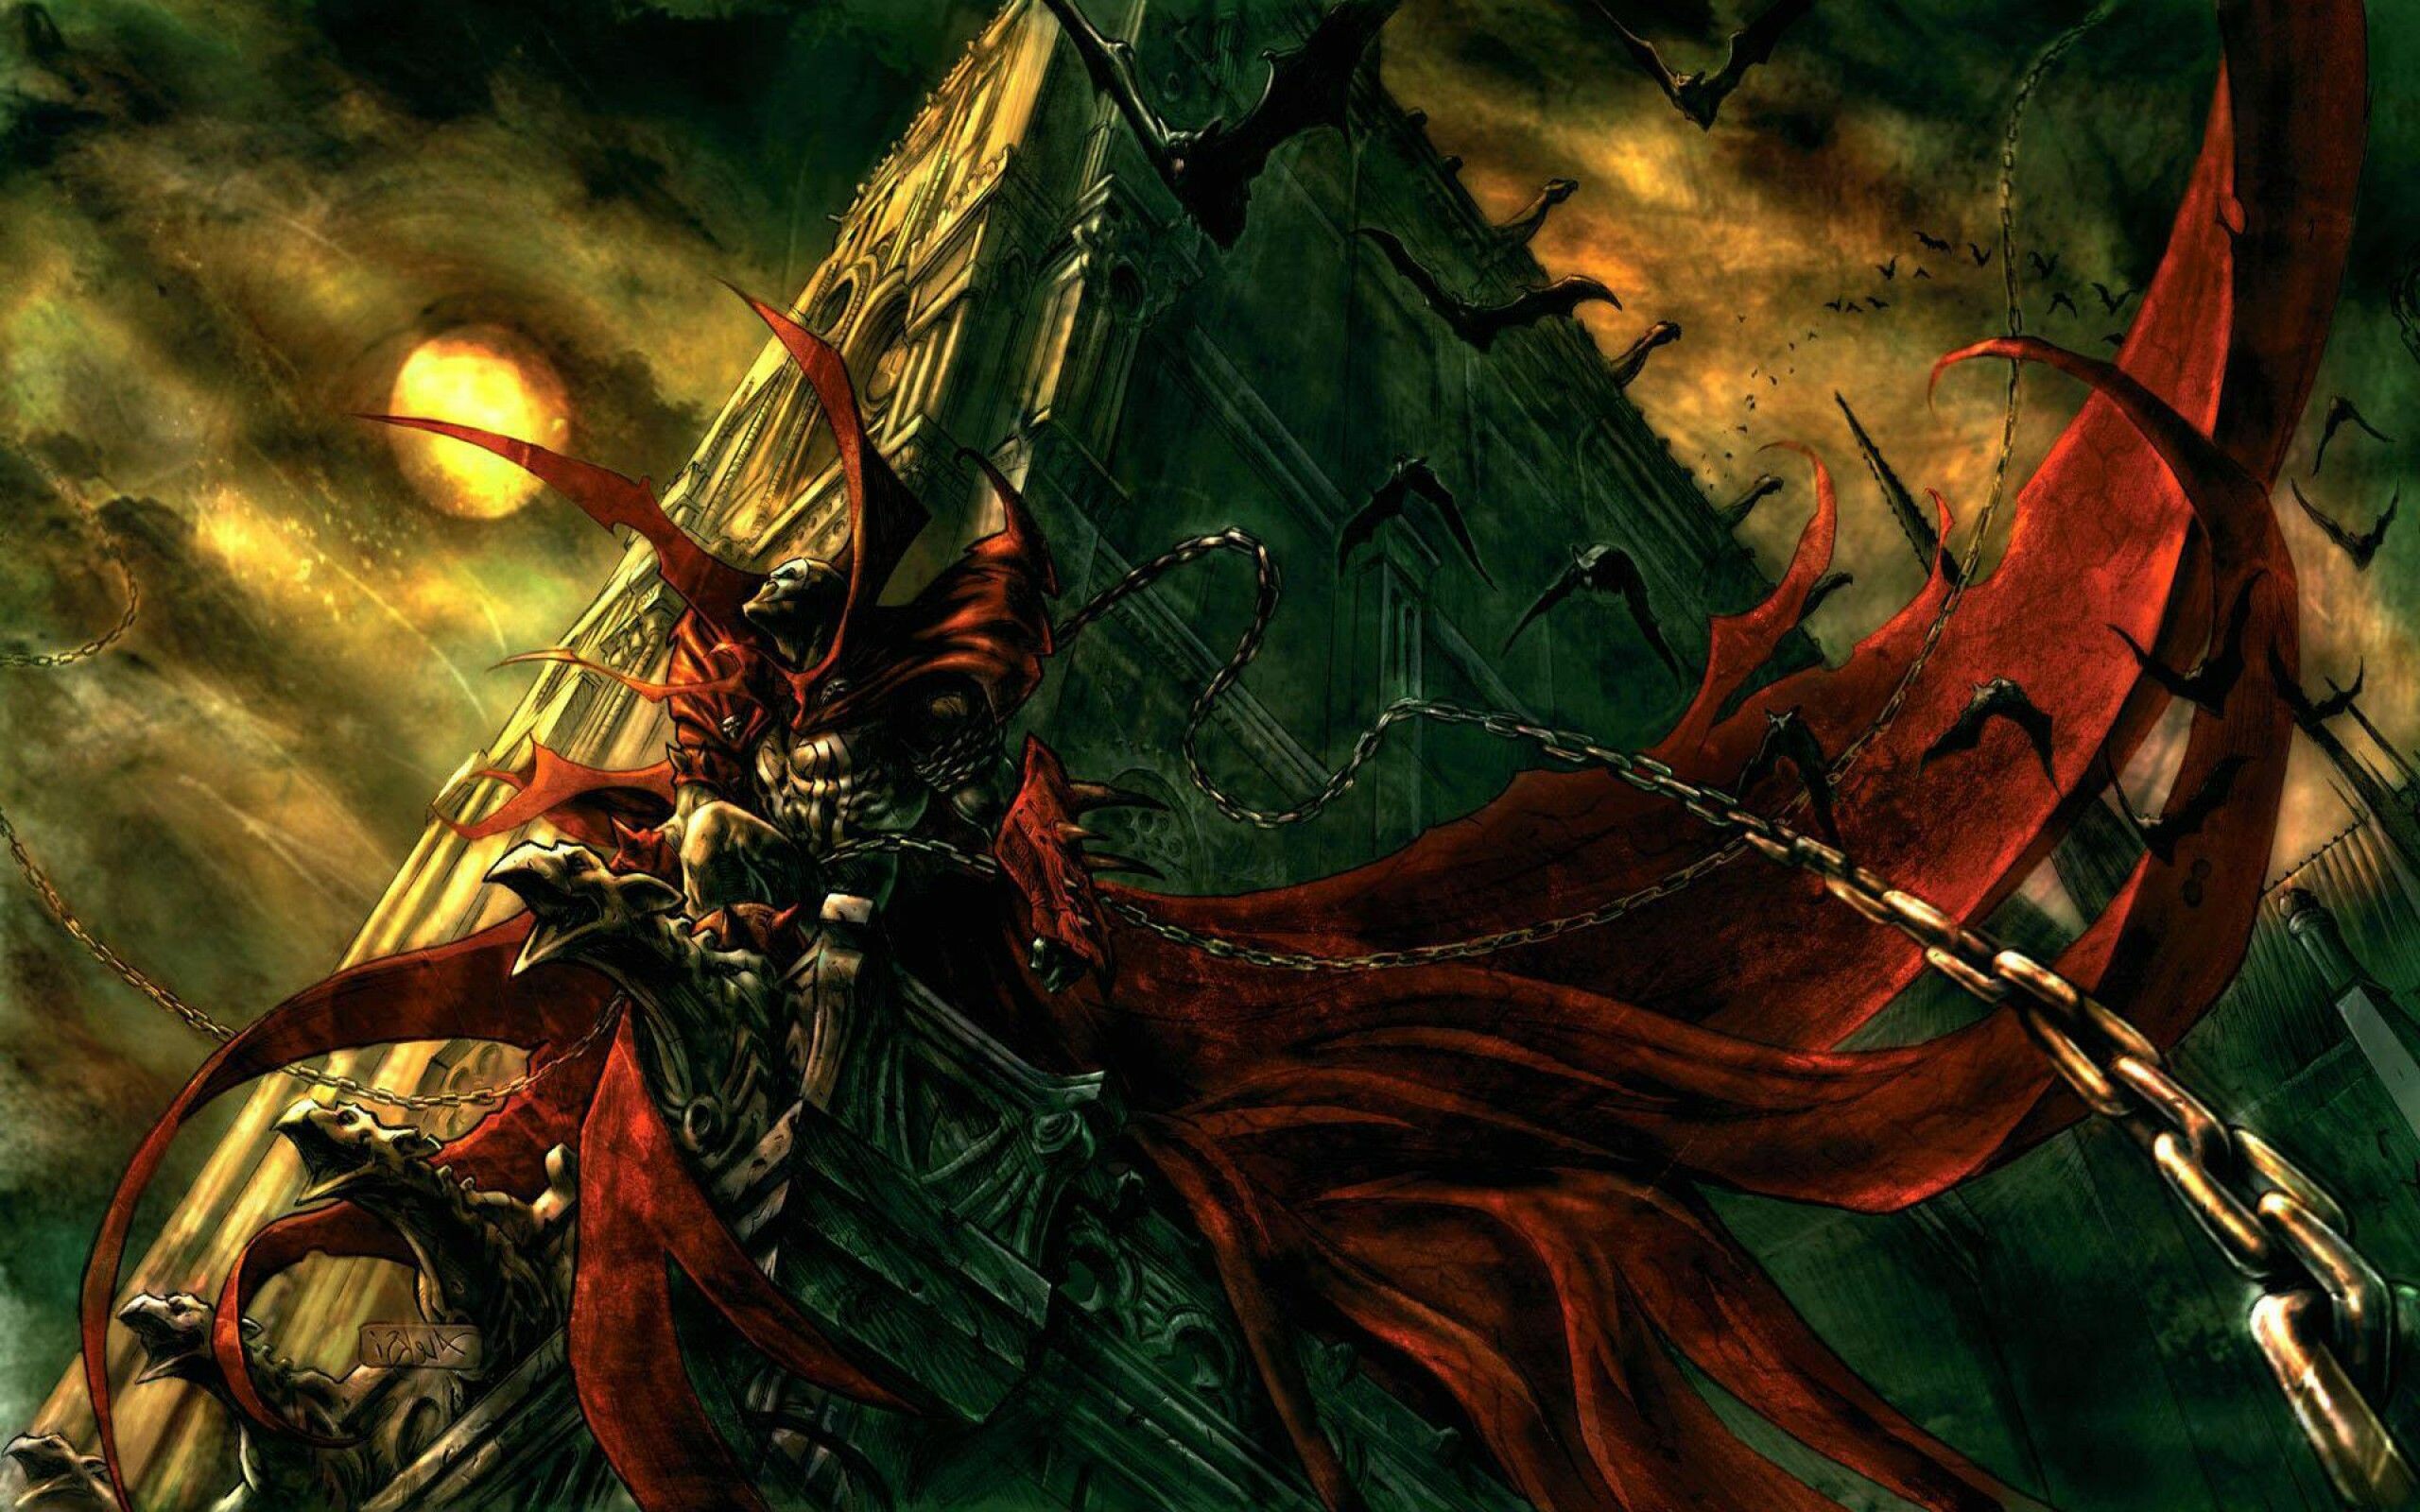 Hellspawn: Ranked №36 on IGN's list of Top 100 Comic Book Heroes. 2560x1600 HD Wallpaper.